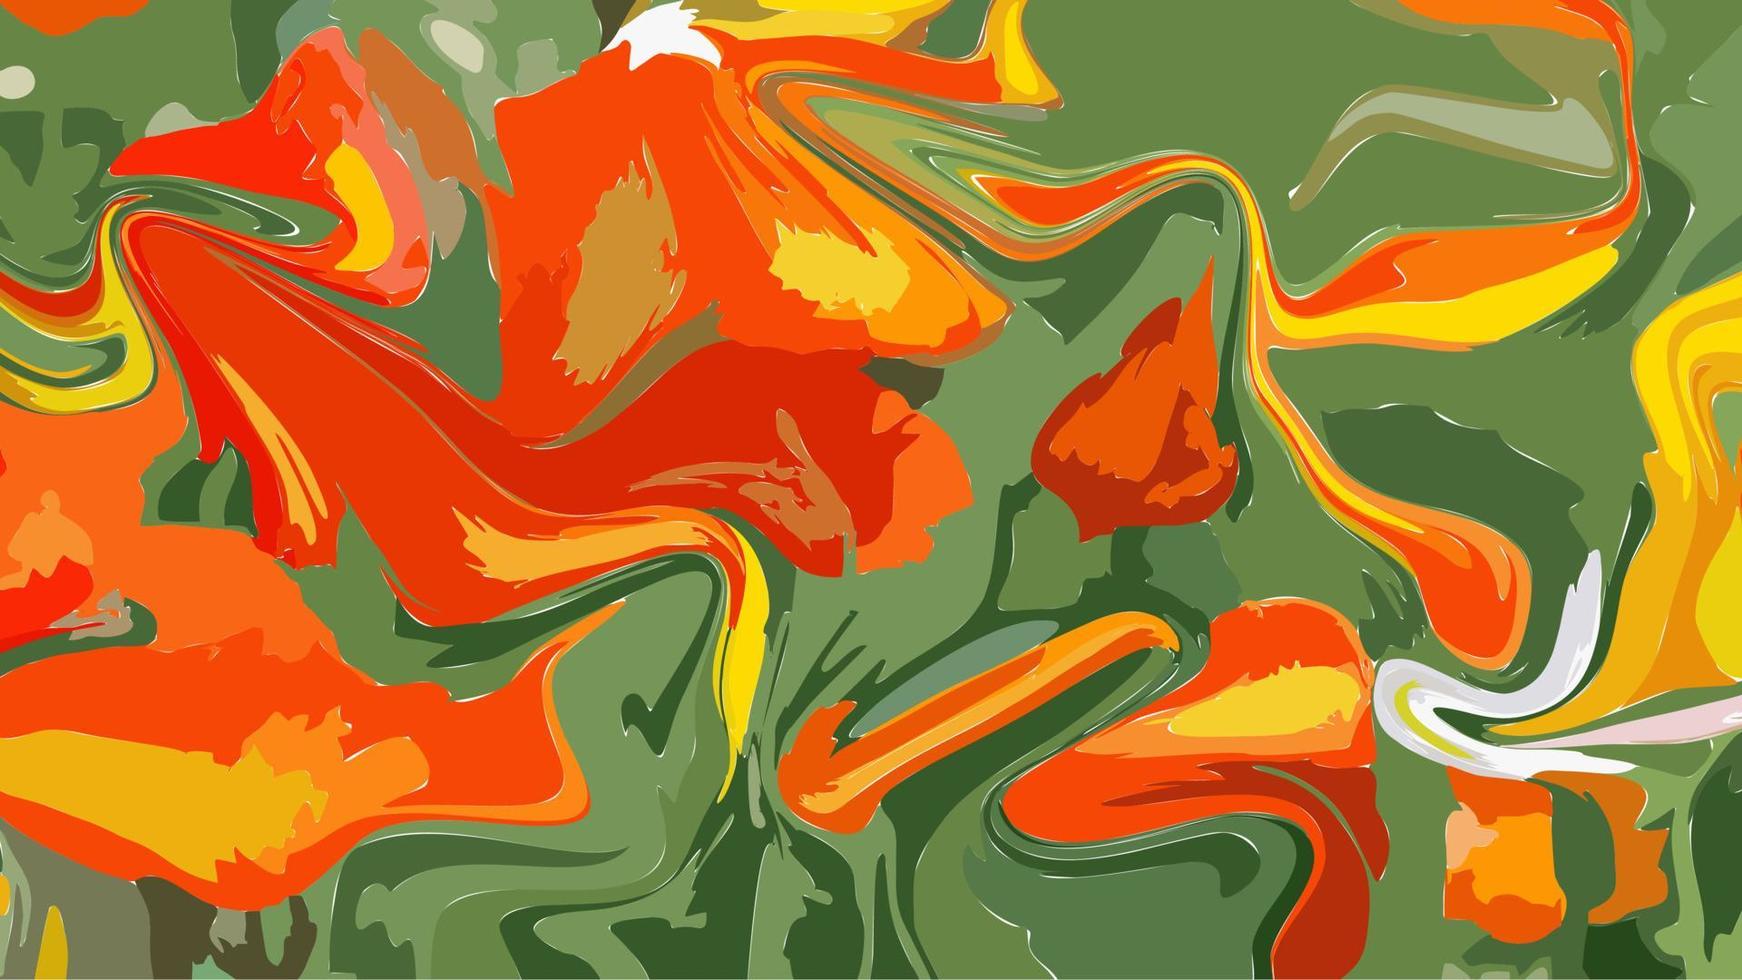 Abstract liquid fluid background modern wallpaper vector illustration